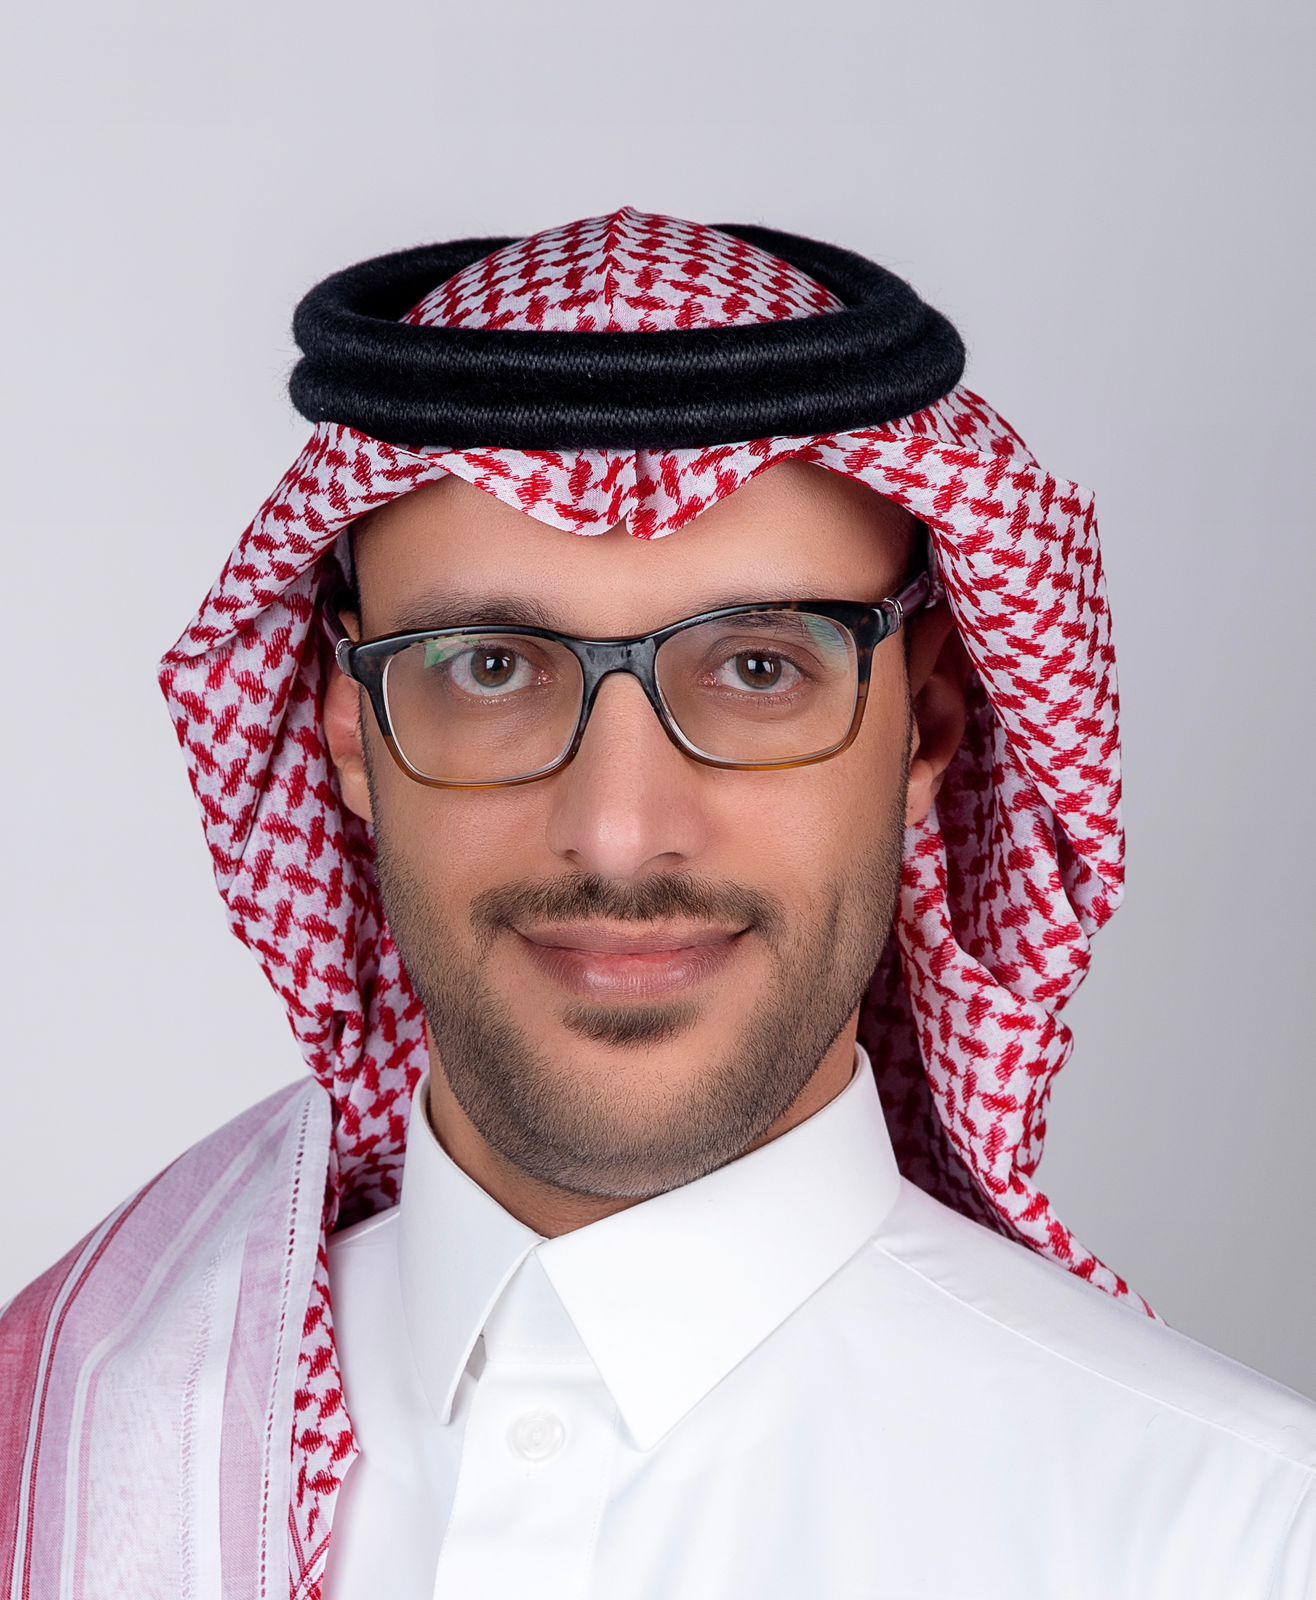 د. فيصل بن محمد العقيل